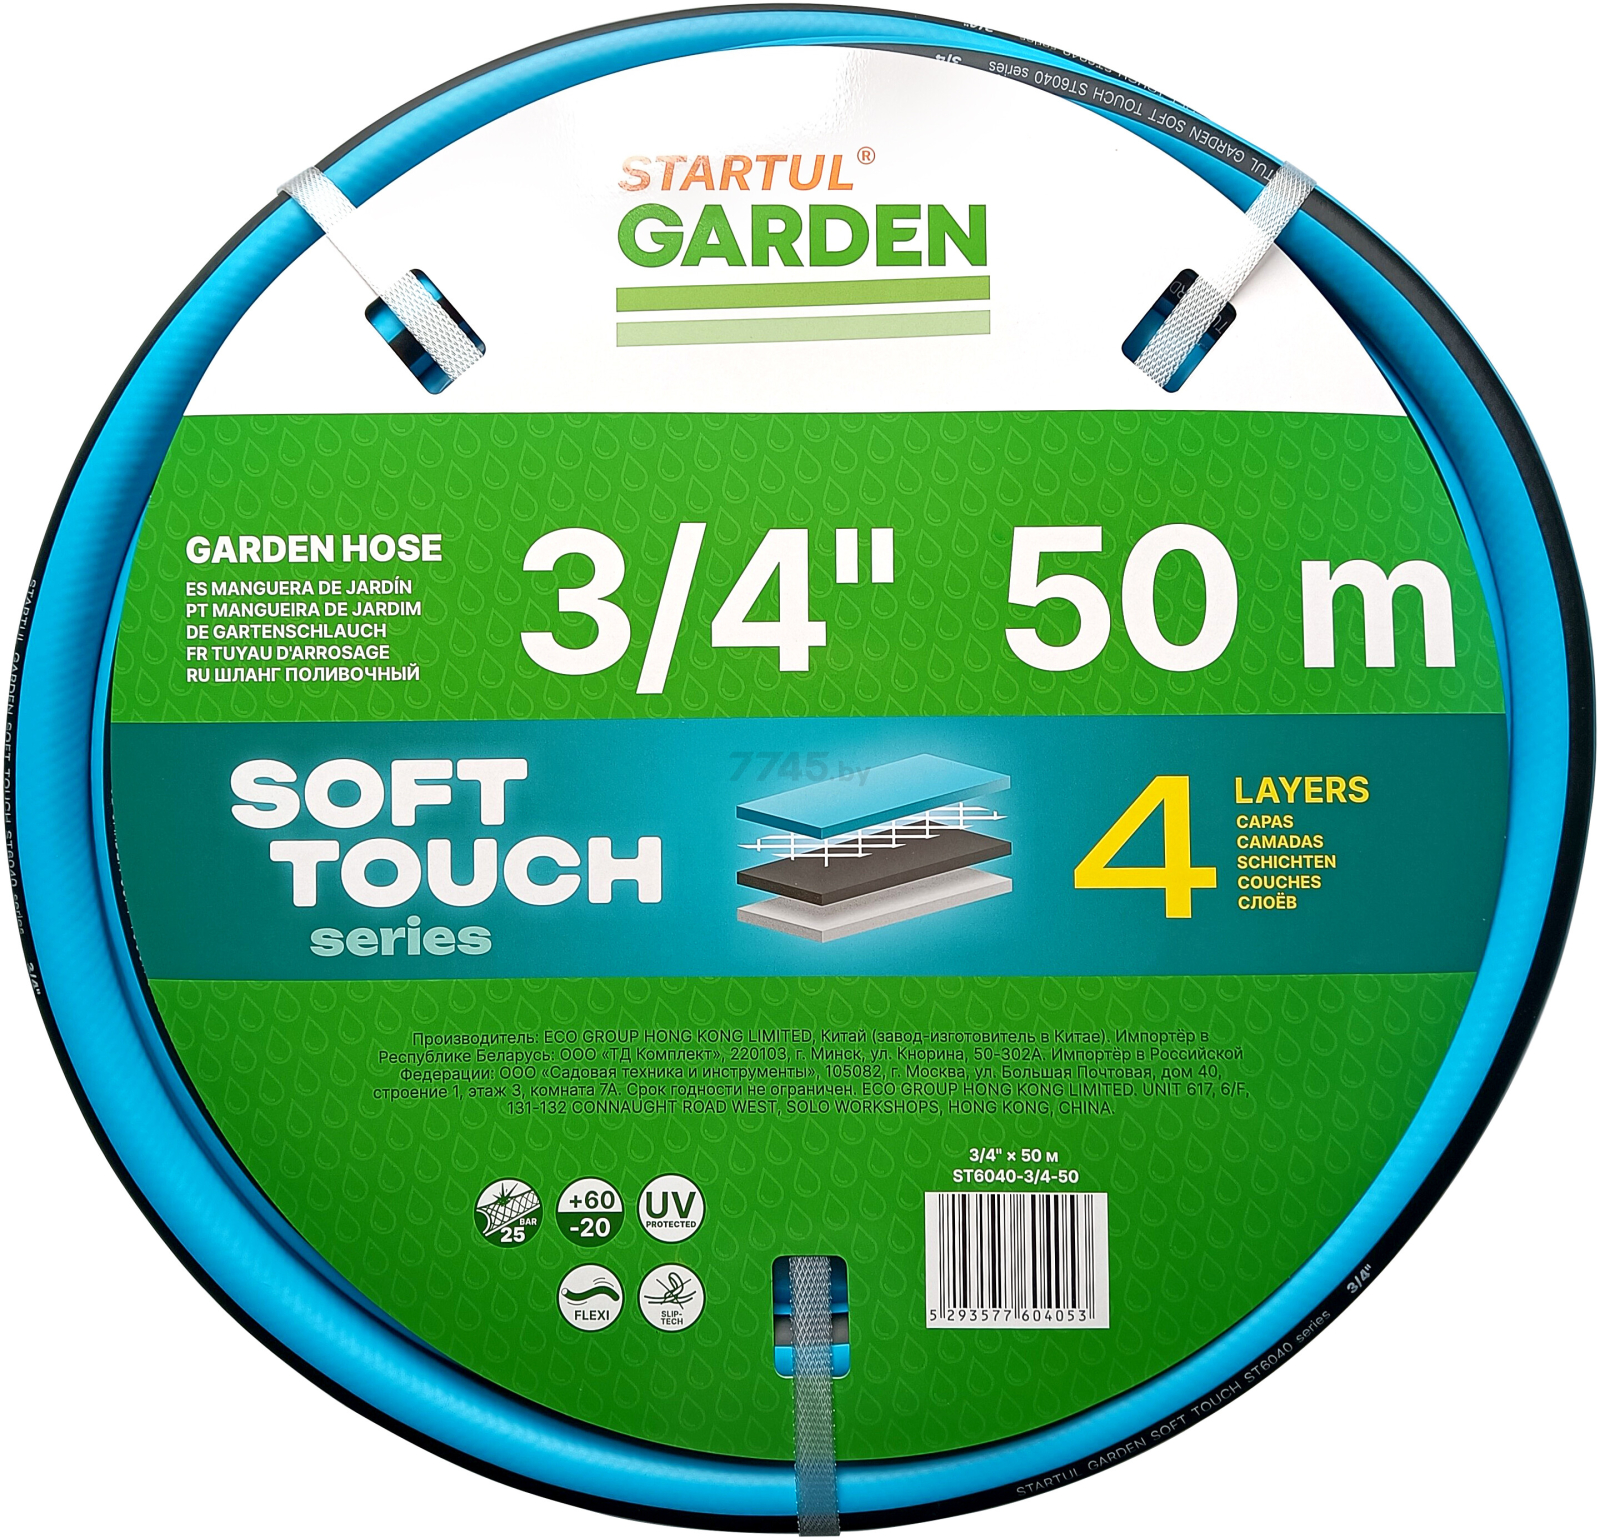 Шланг поливочный STARTUL Garden Soft Touch 3/4" 50 м (ST6040-3/4-50)